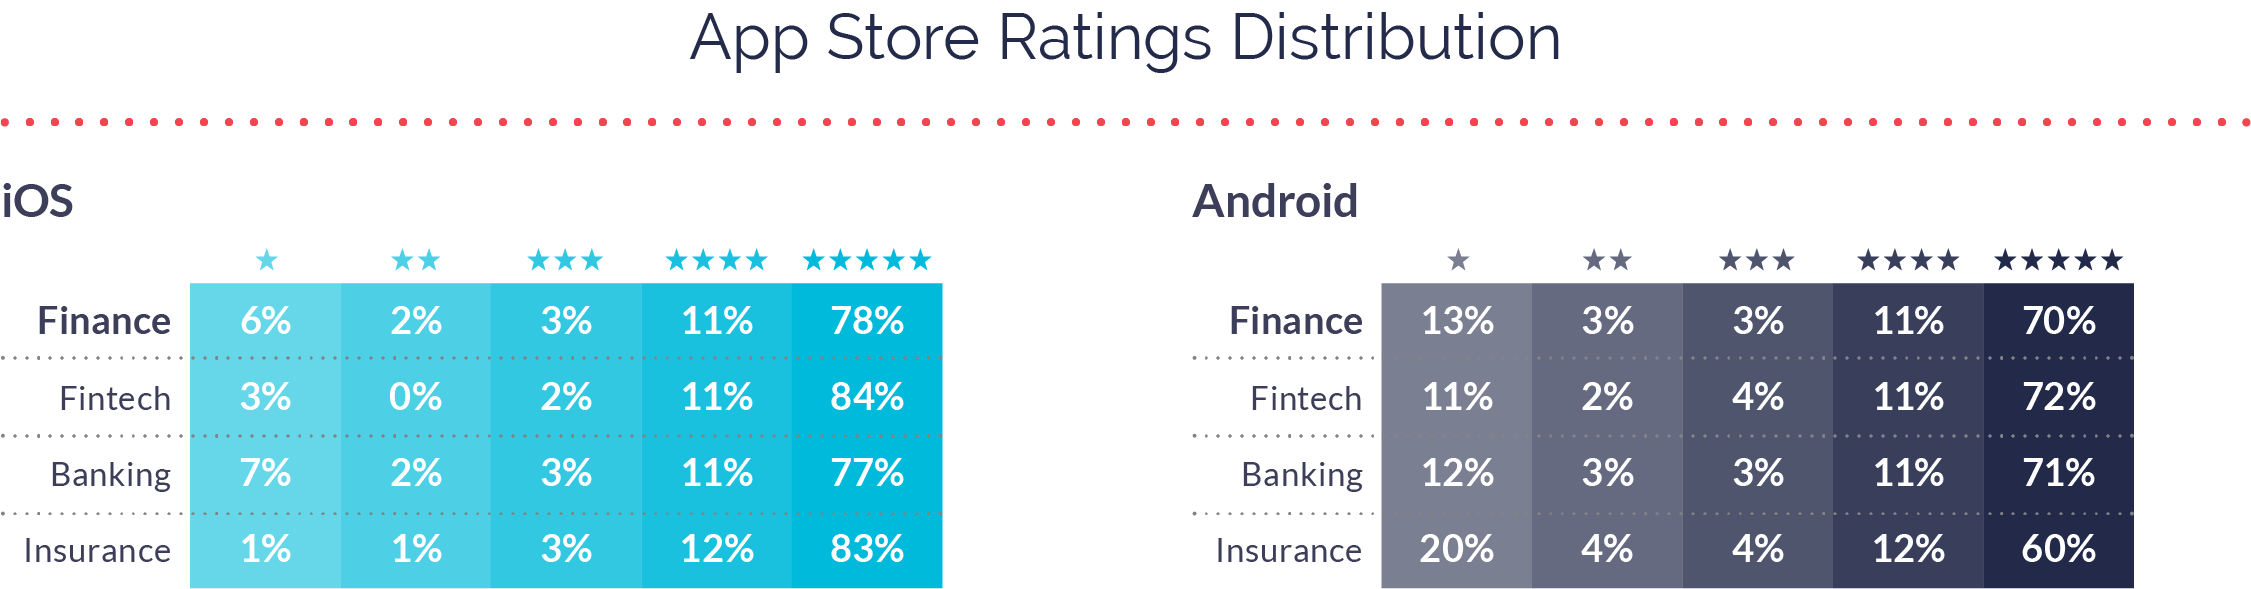 App Store Ratings Distribution